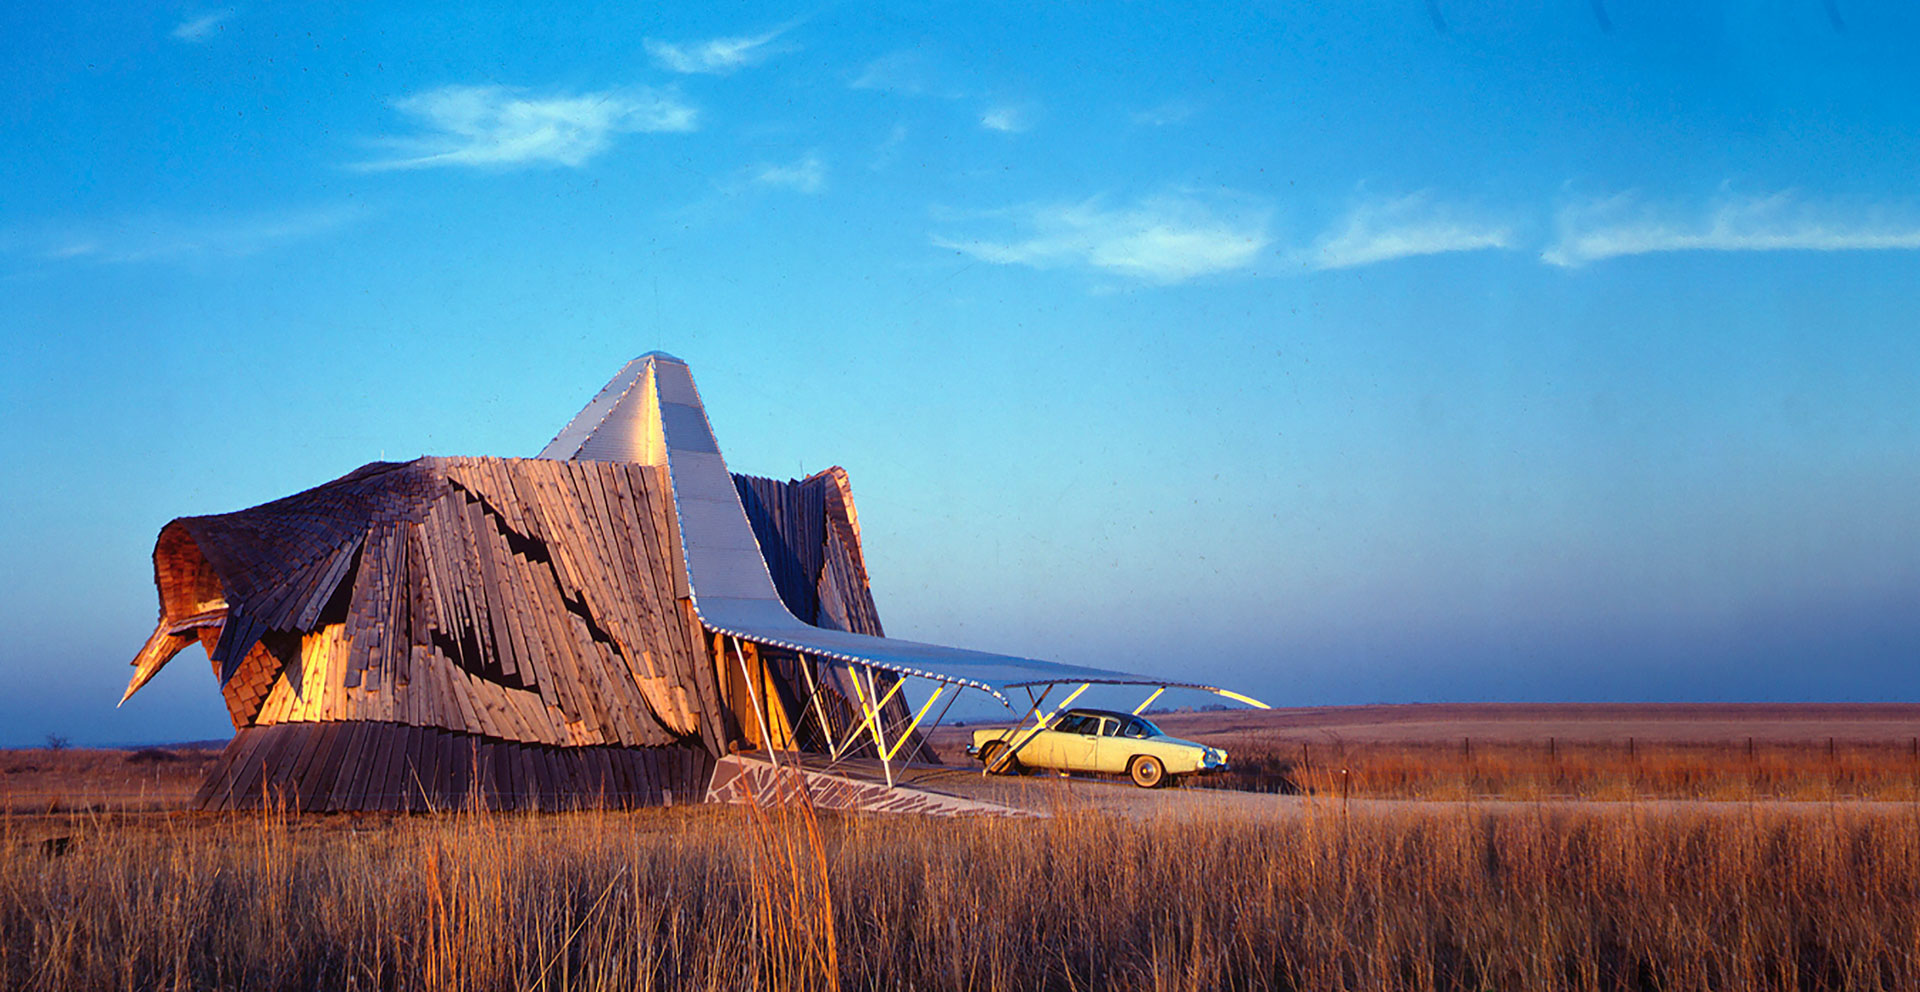 Lore, 1961 - Images of Oklahoma - Oklahoma Digital Prairie